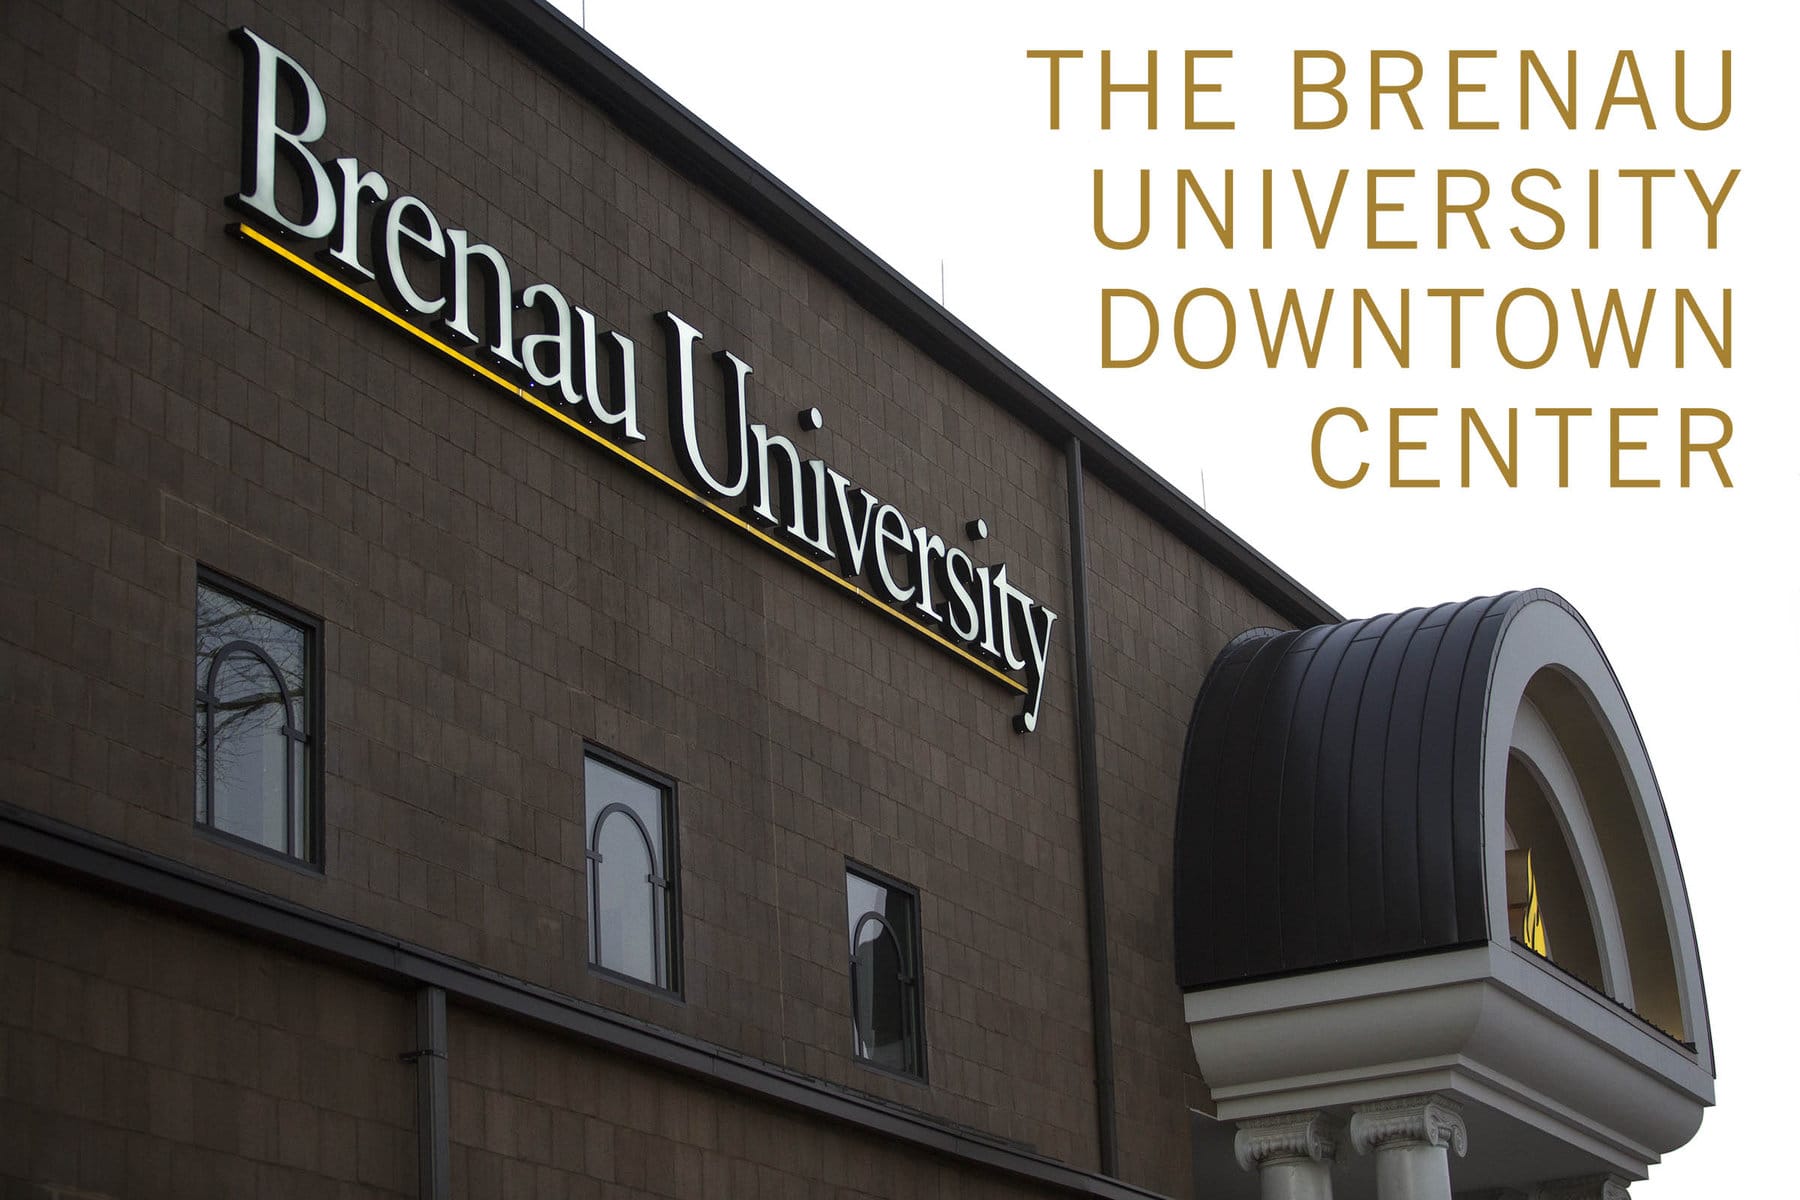 The Brenau University Downtown Center